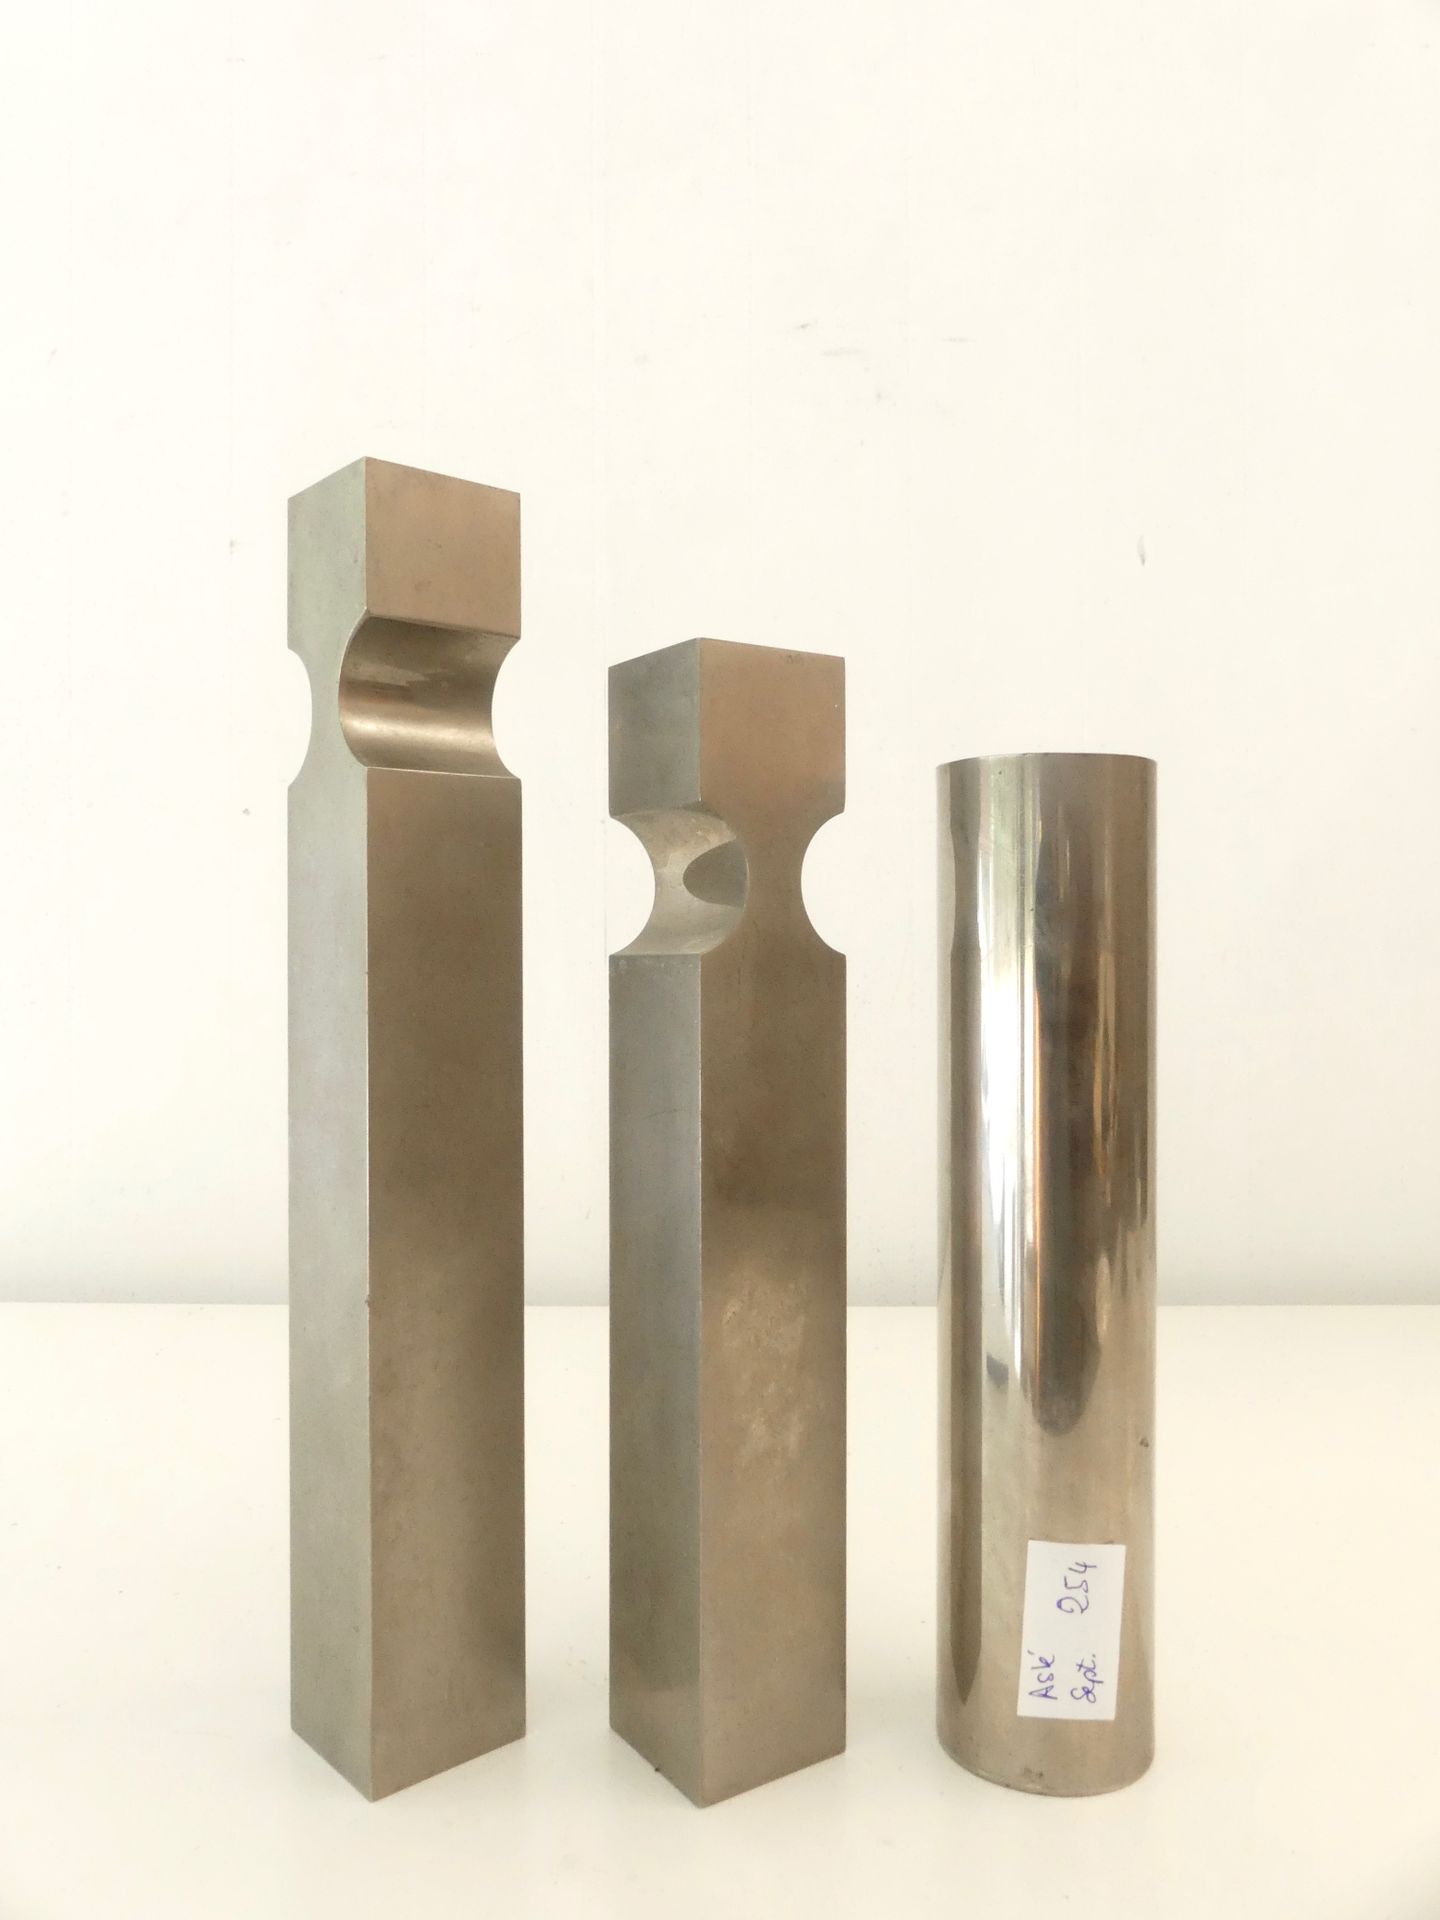 Null Carl LIPP Germany, Vases modernistes en Métal, vers 1960 (Ht max: 29 cm)